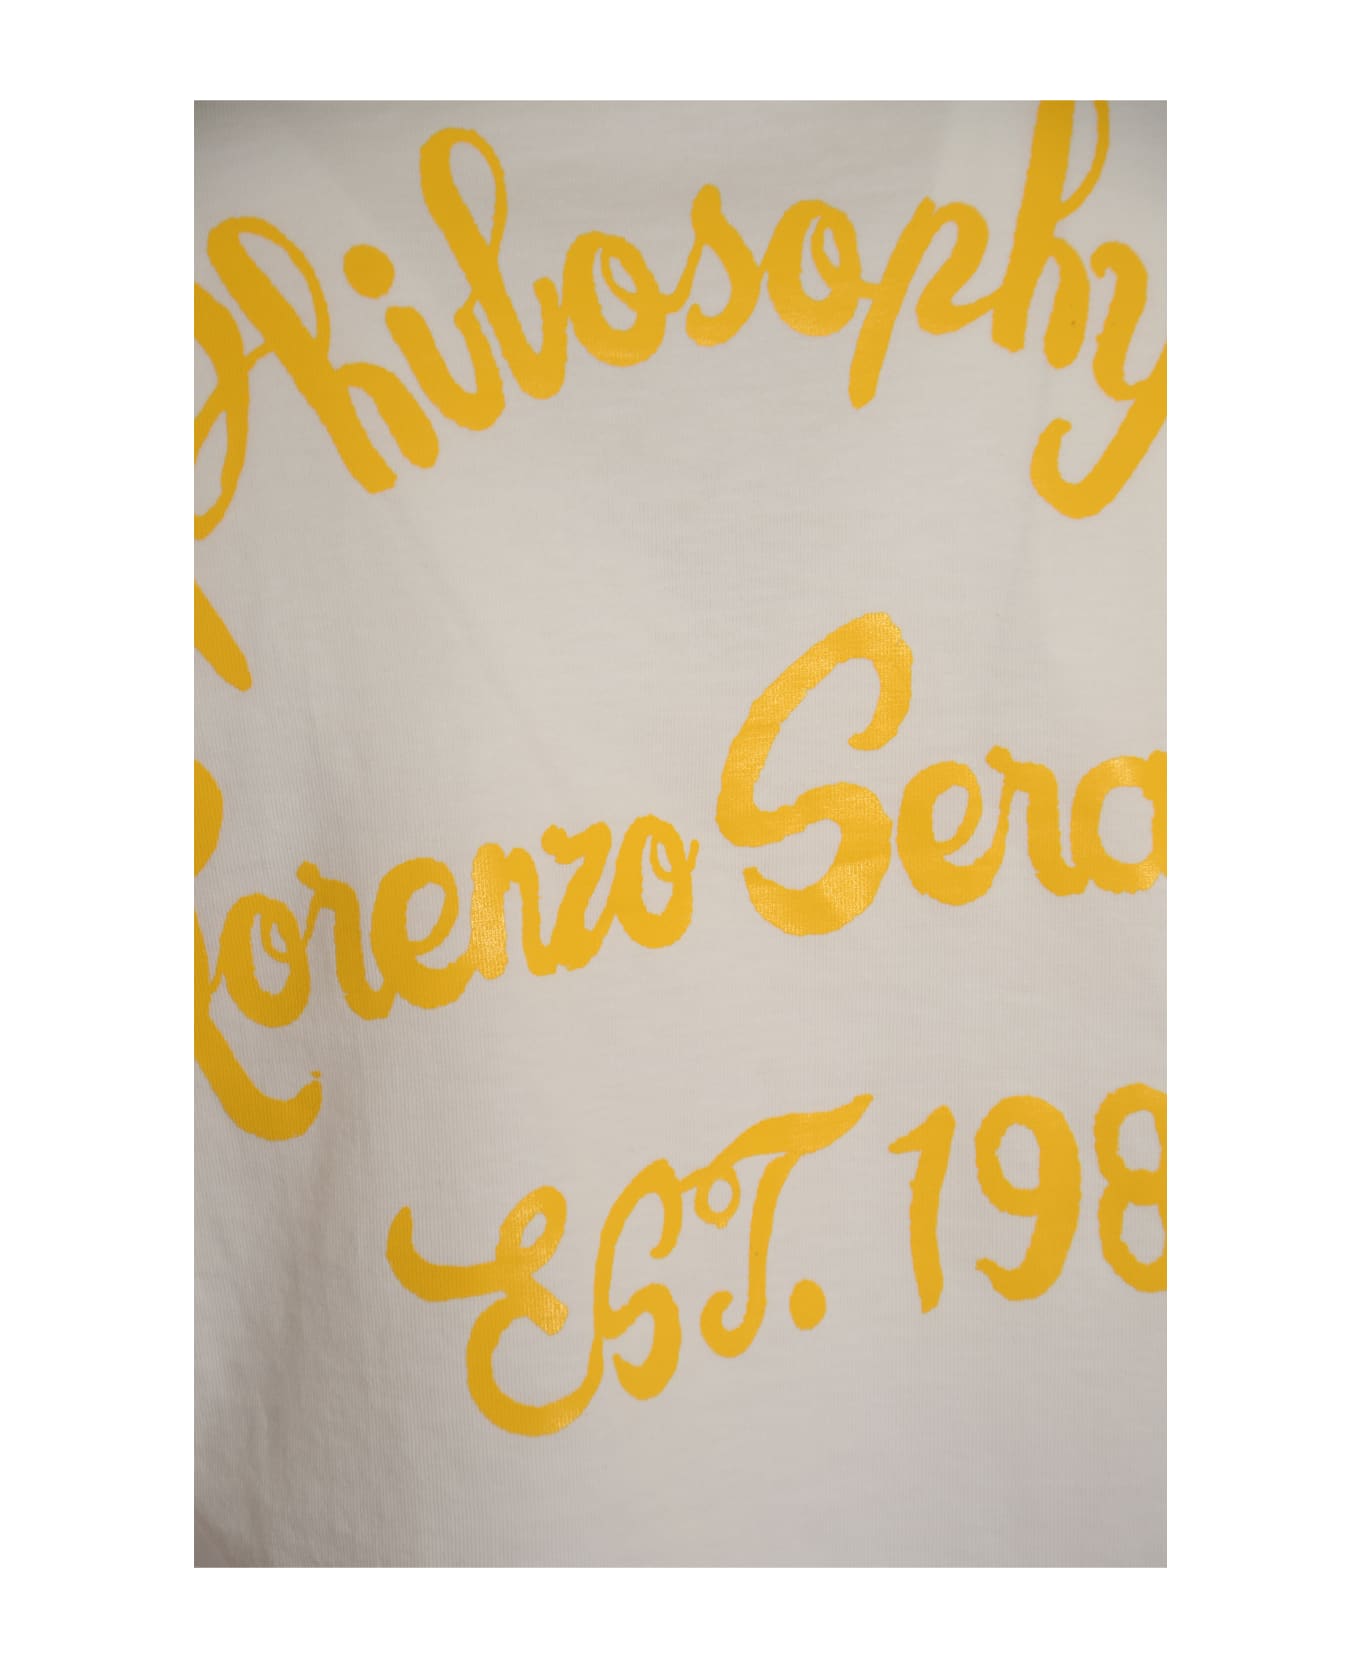 Philosophy di Lorenzo Serafini Logo Print Cropped T-shirt